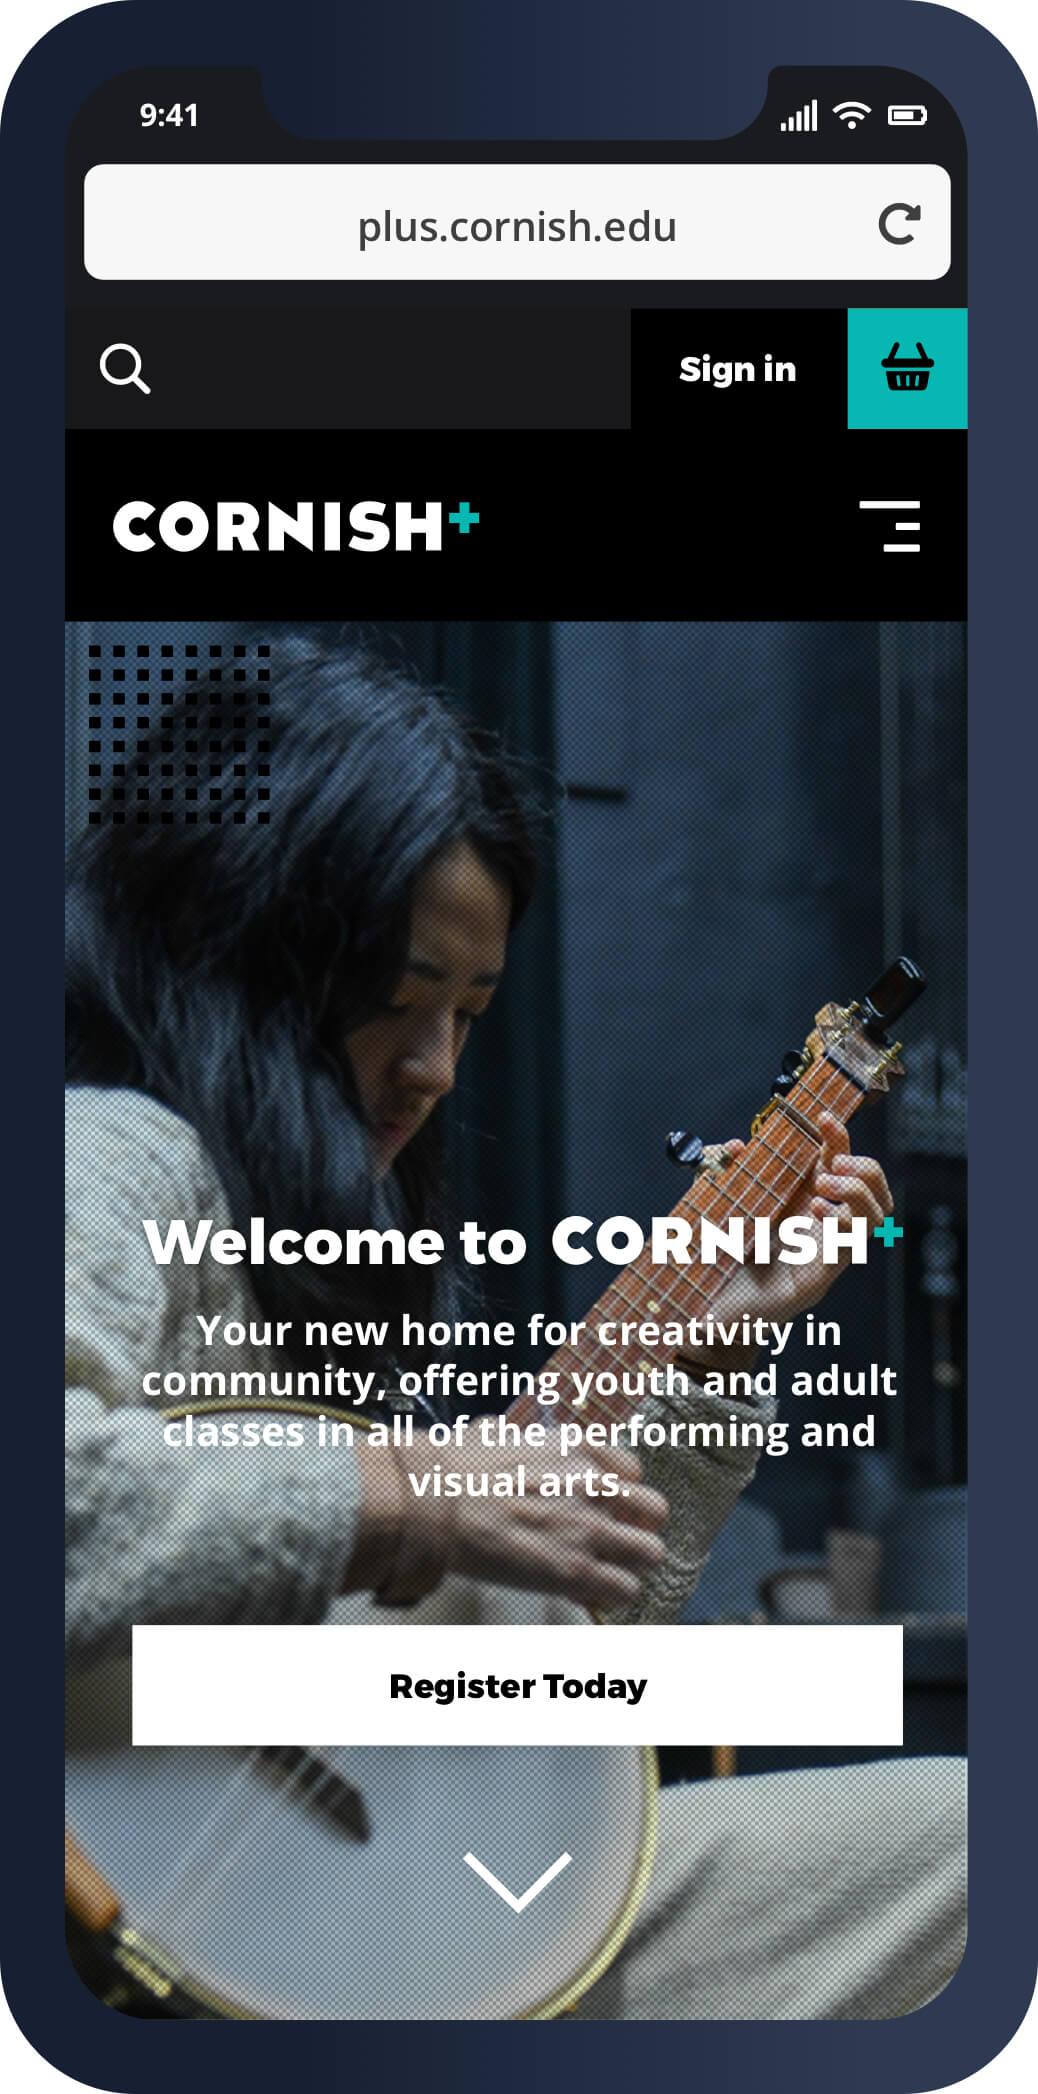 Mobile screenshot of the Cornish+ homepage